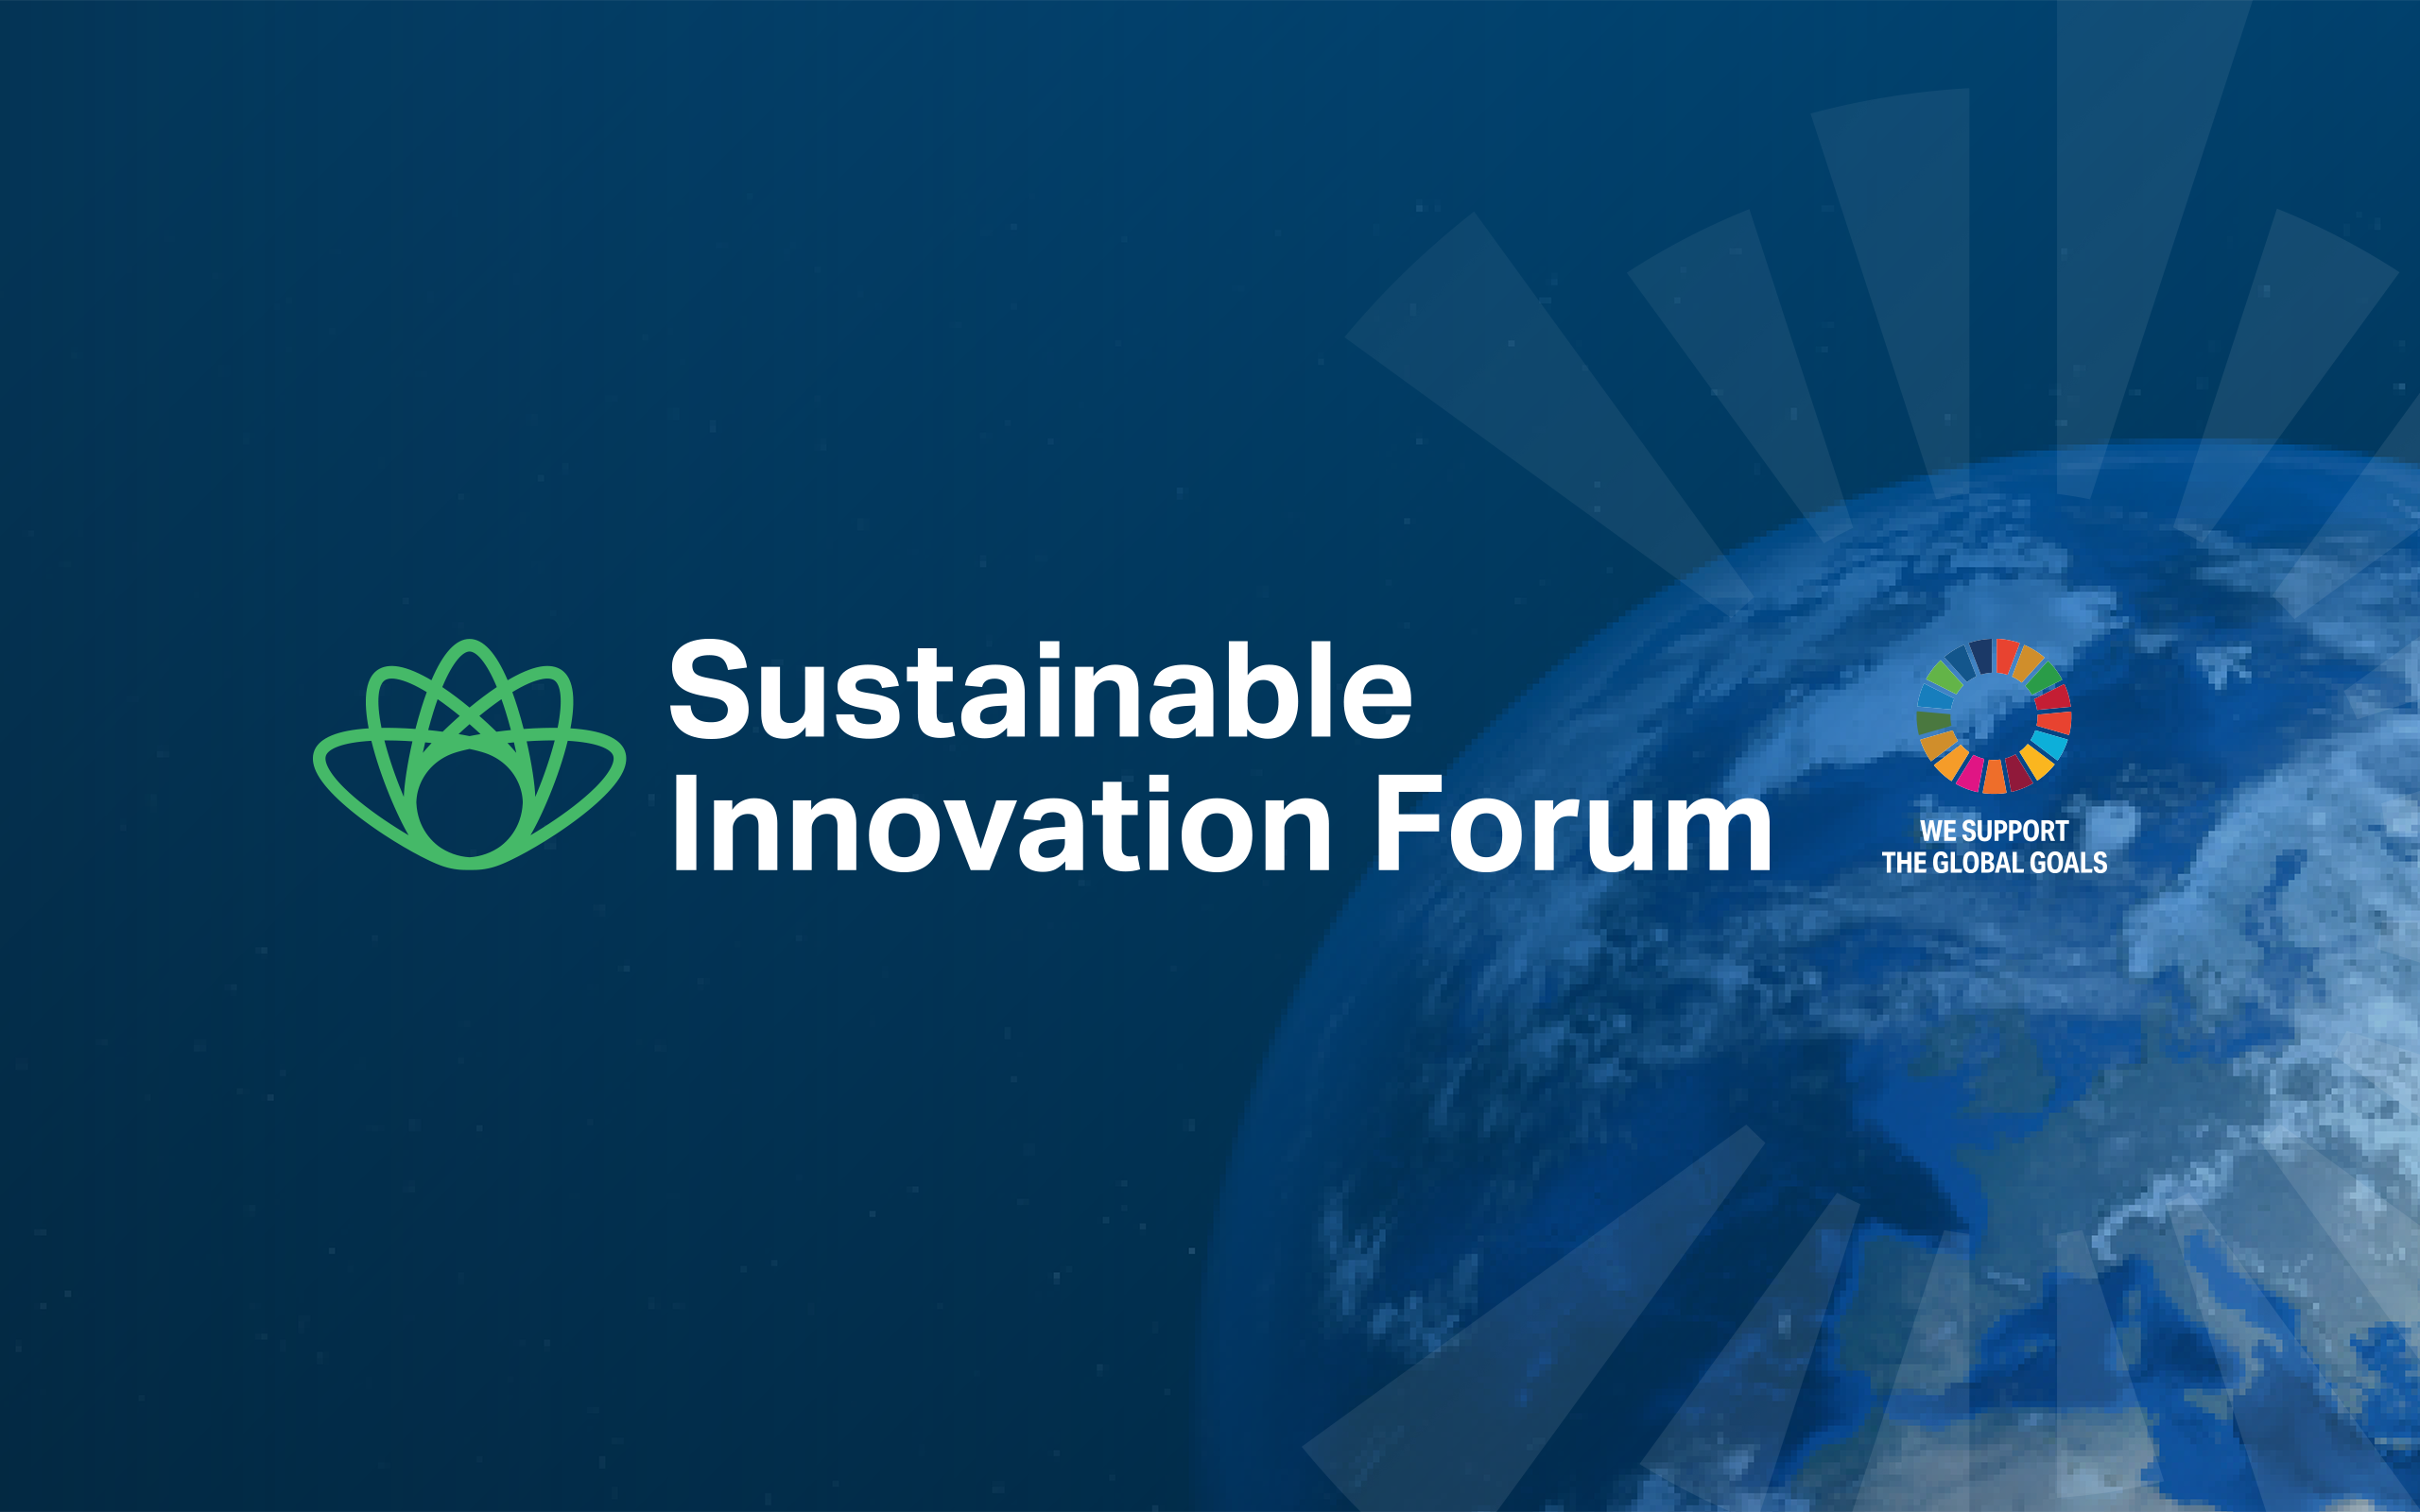 Sustainable Innovation Forum 2021